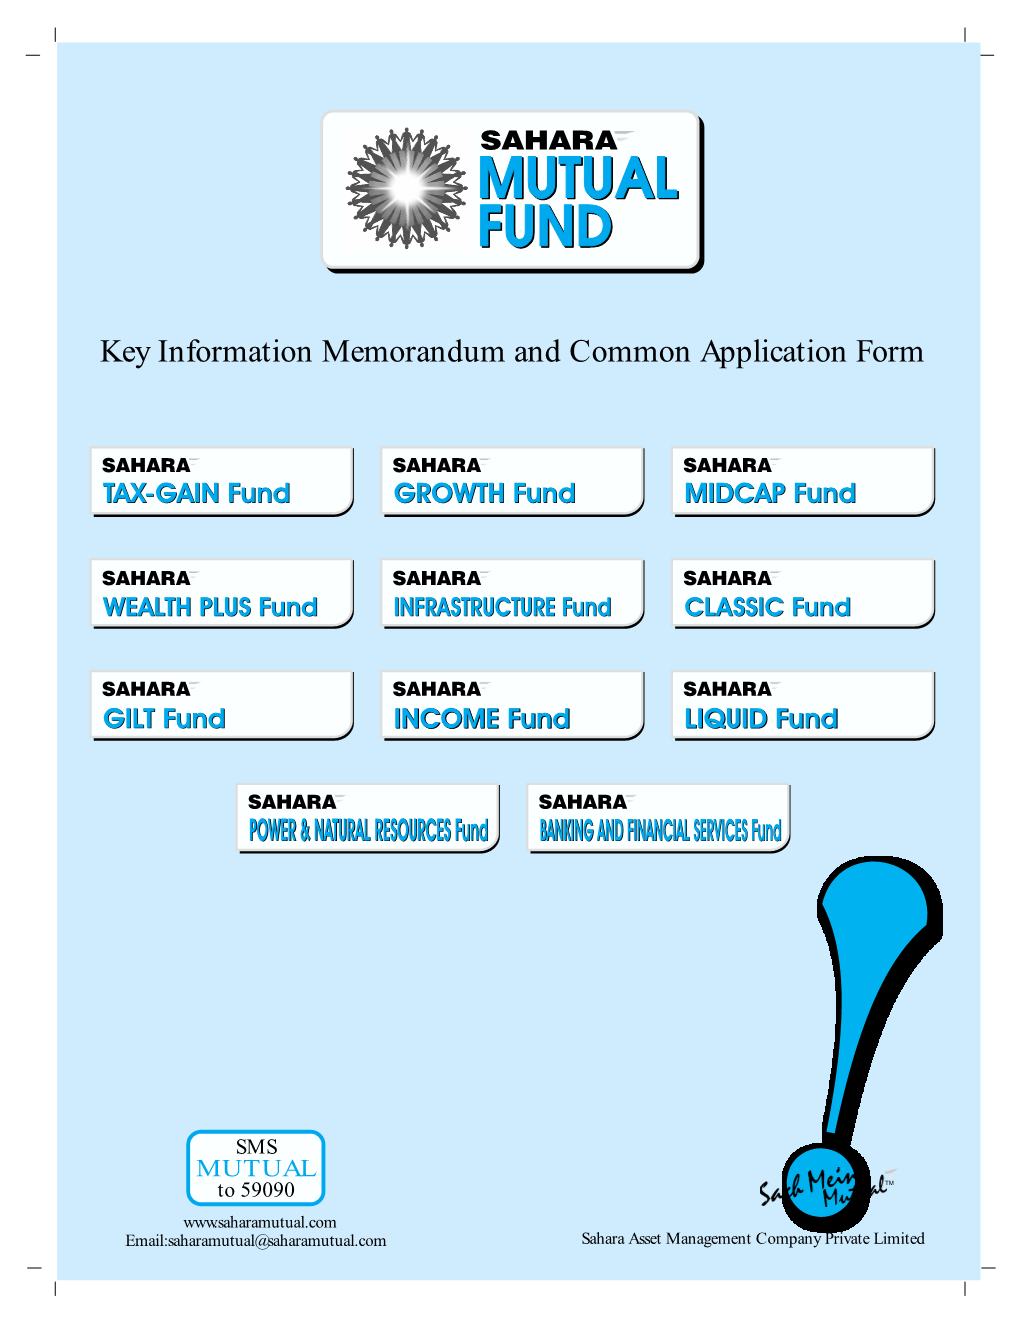 Key Information Memorandum and Common Application Form